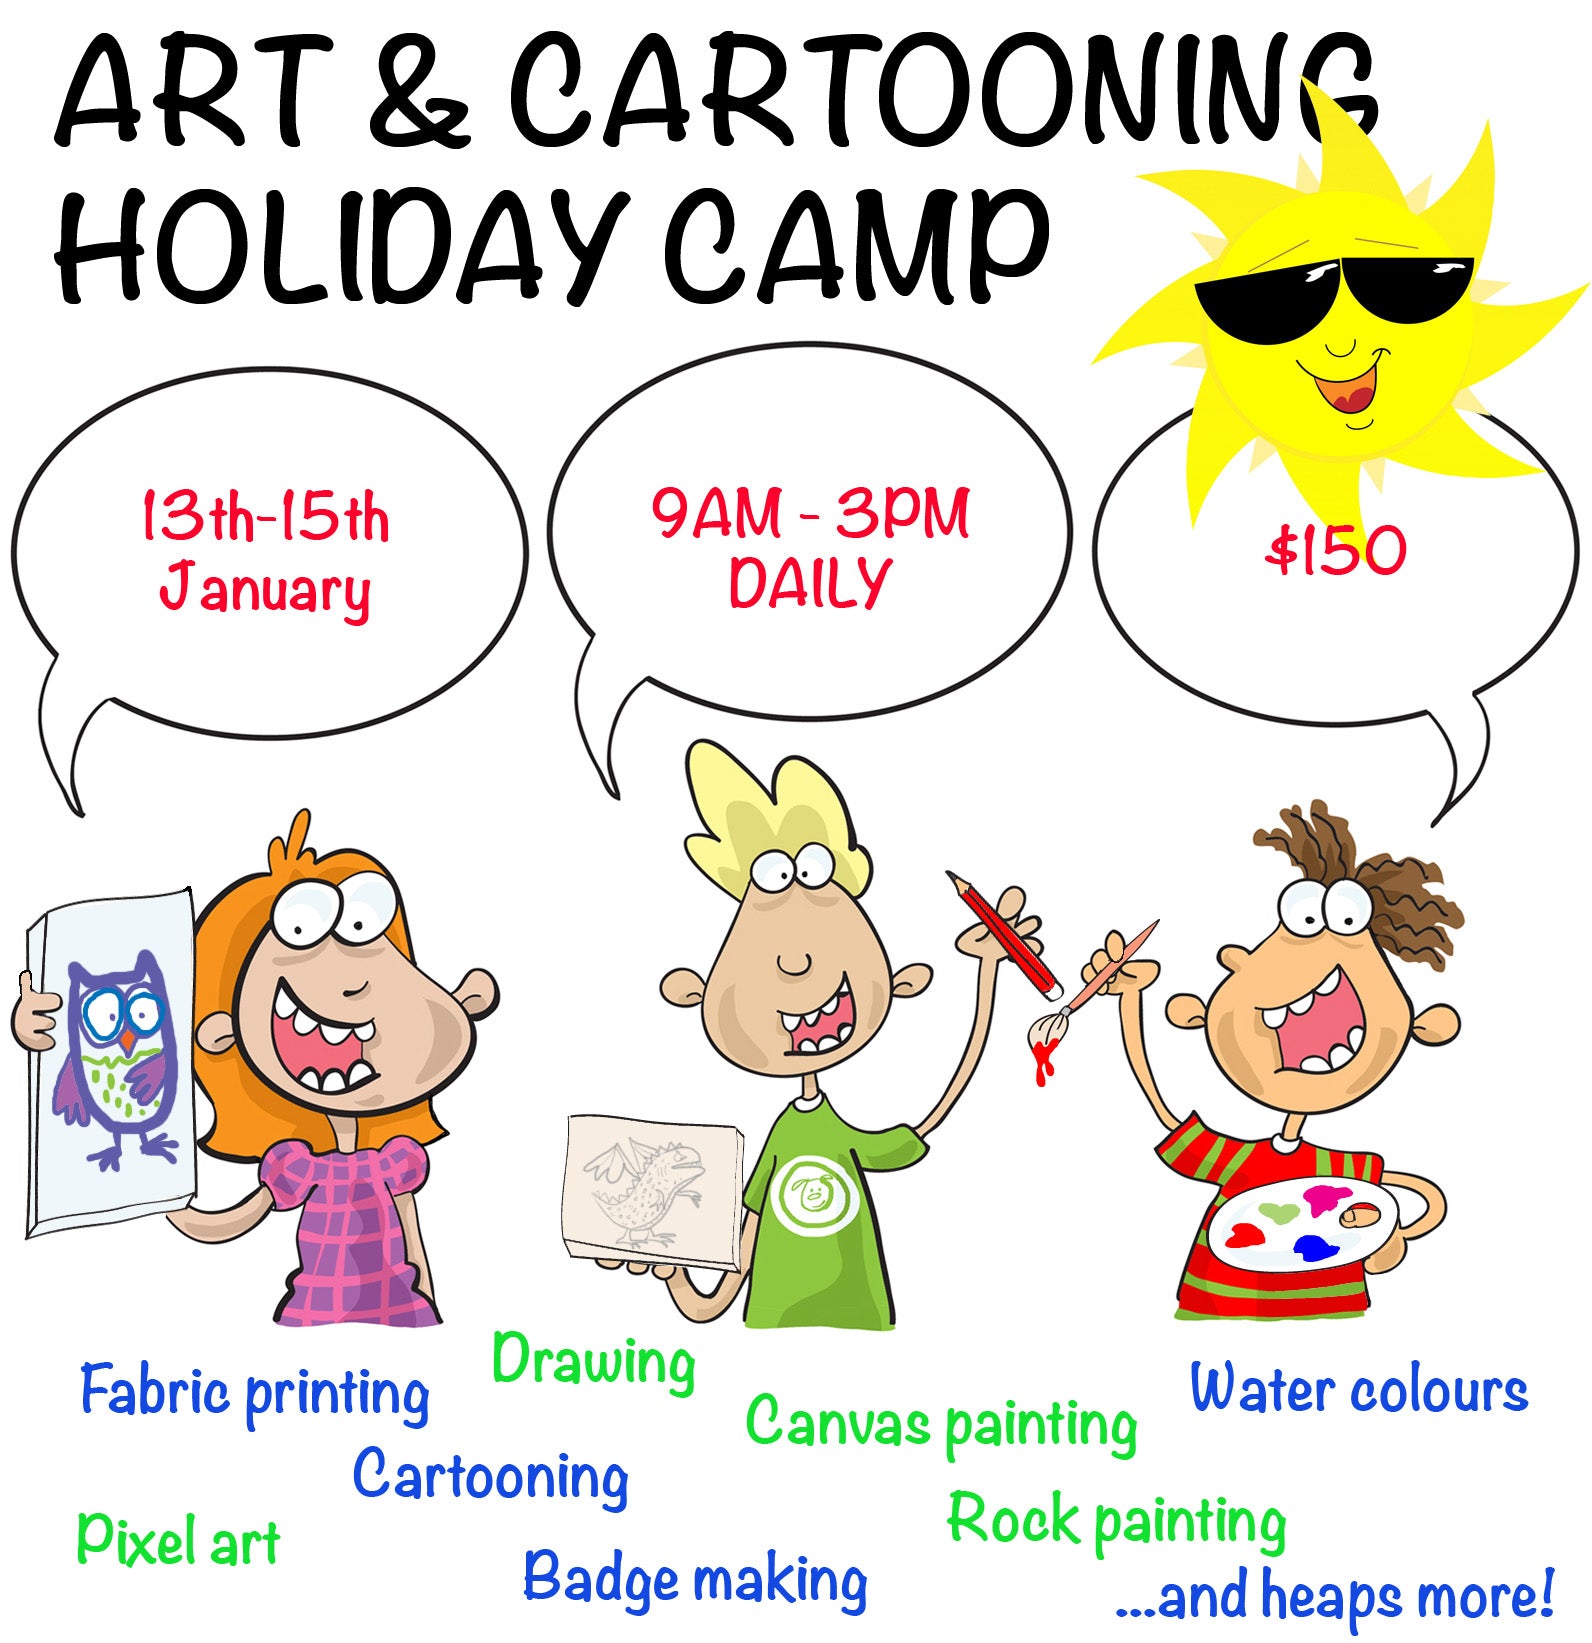 Art and Cartooning Holiday Camp - January13-15 2020